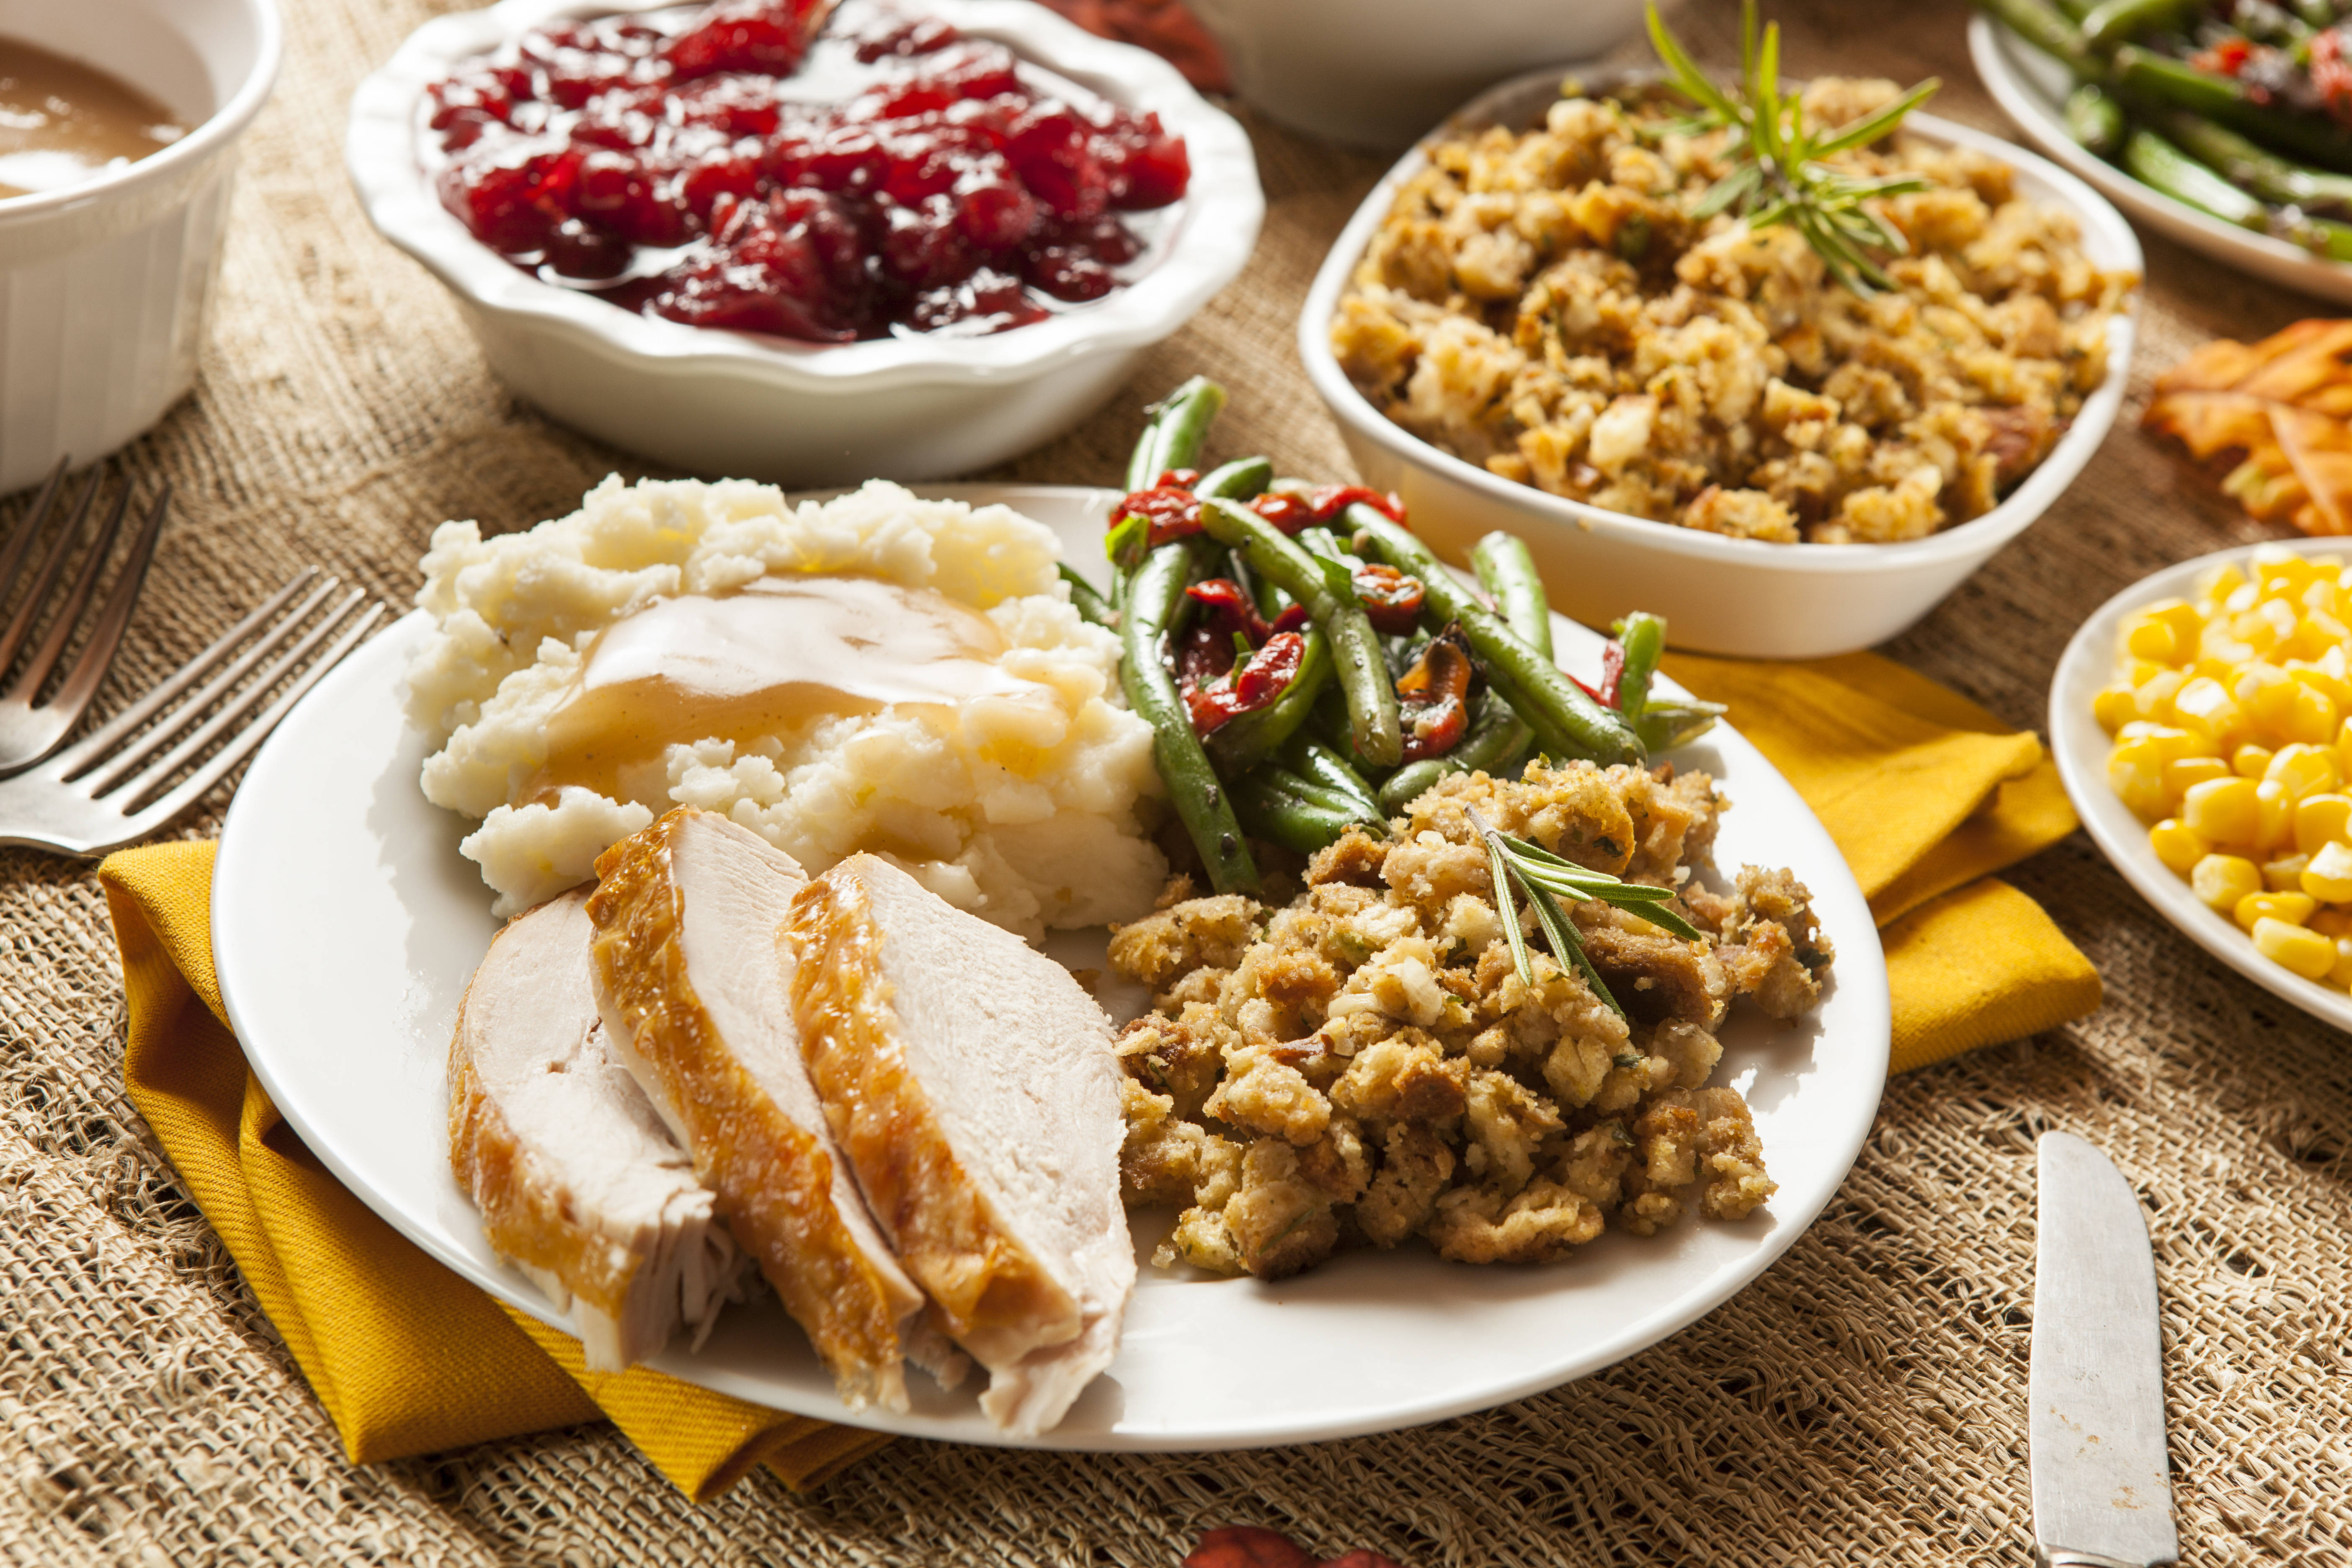 Ideas For Thanksgiving Dinner
 THANKSGIVING MENU IDEAS